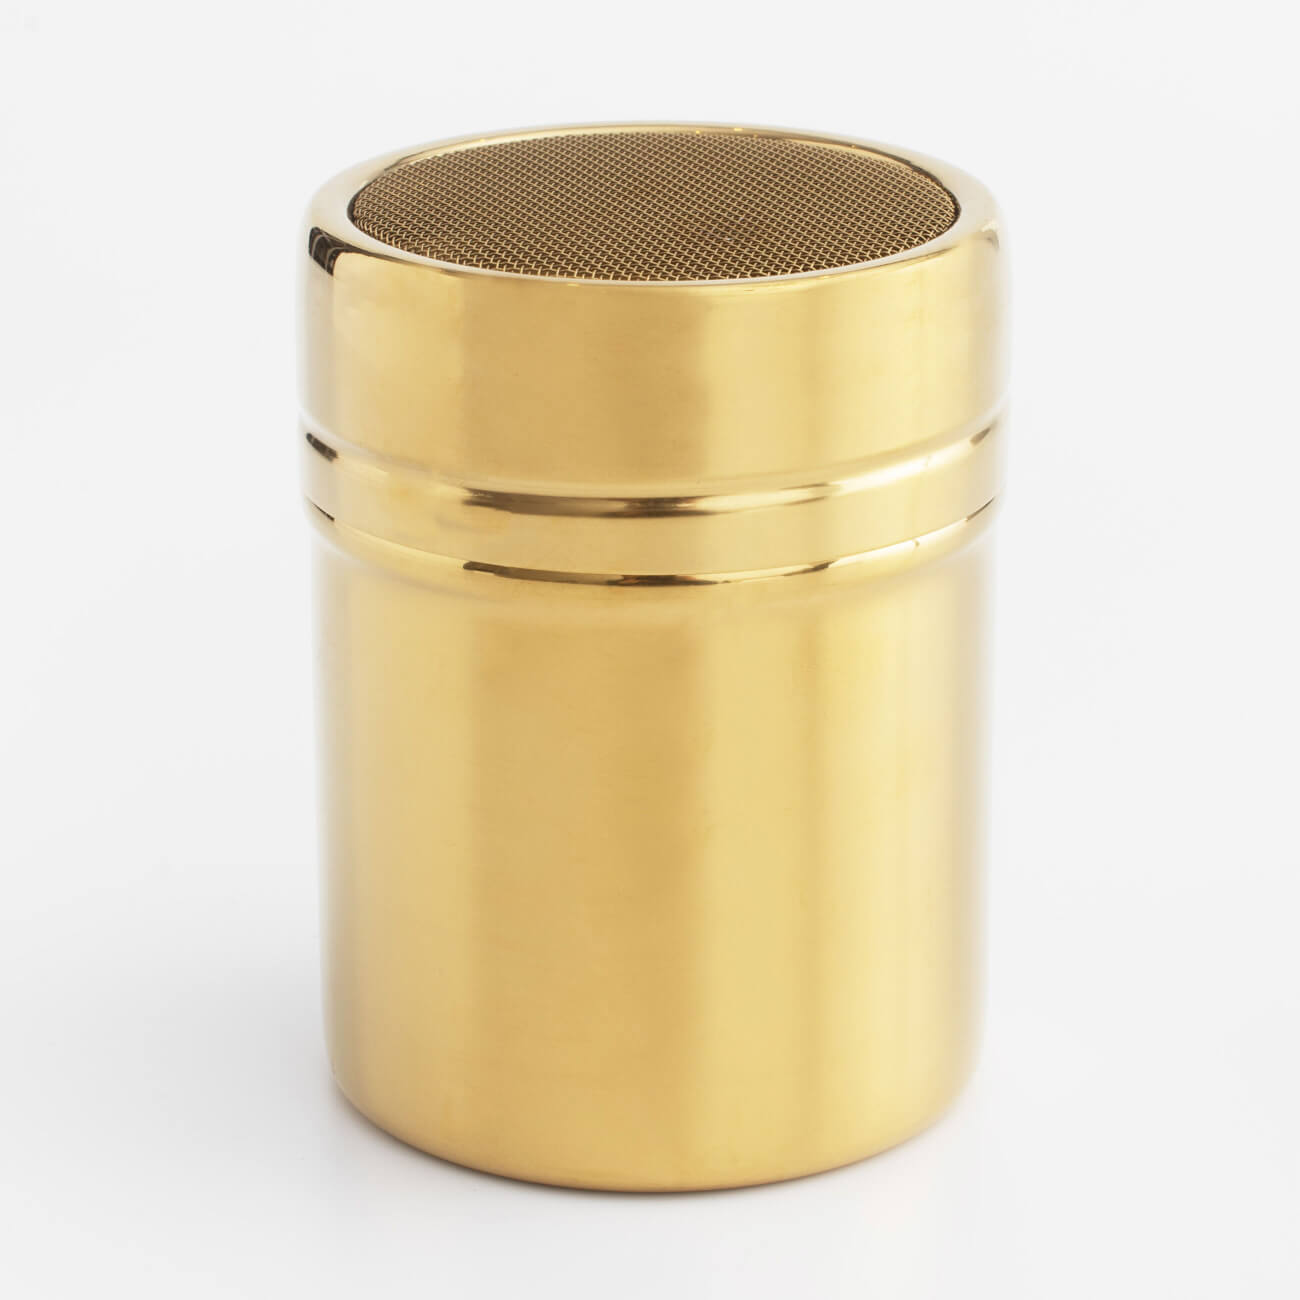 Сито-кружка, 9х7 см, с крышкой, сталь/пластик, золотистое, Classic gold набор для приготовления теста 4 предмета миска сито сепаратор лопатка пластик daniks y4 7876